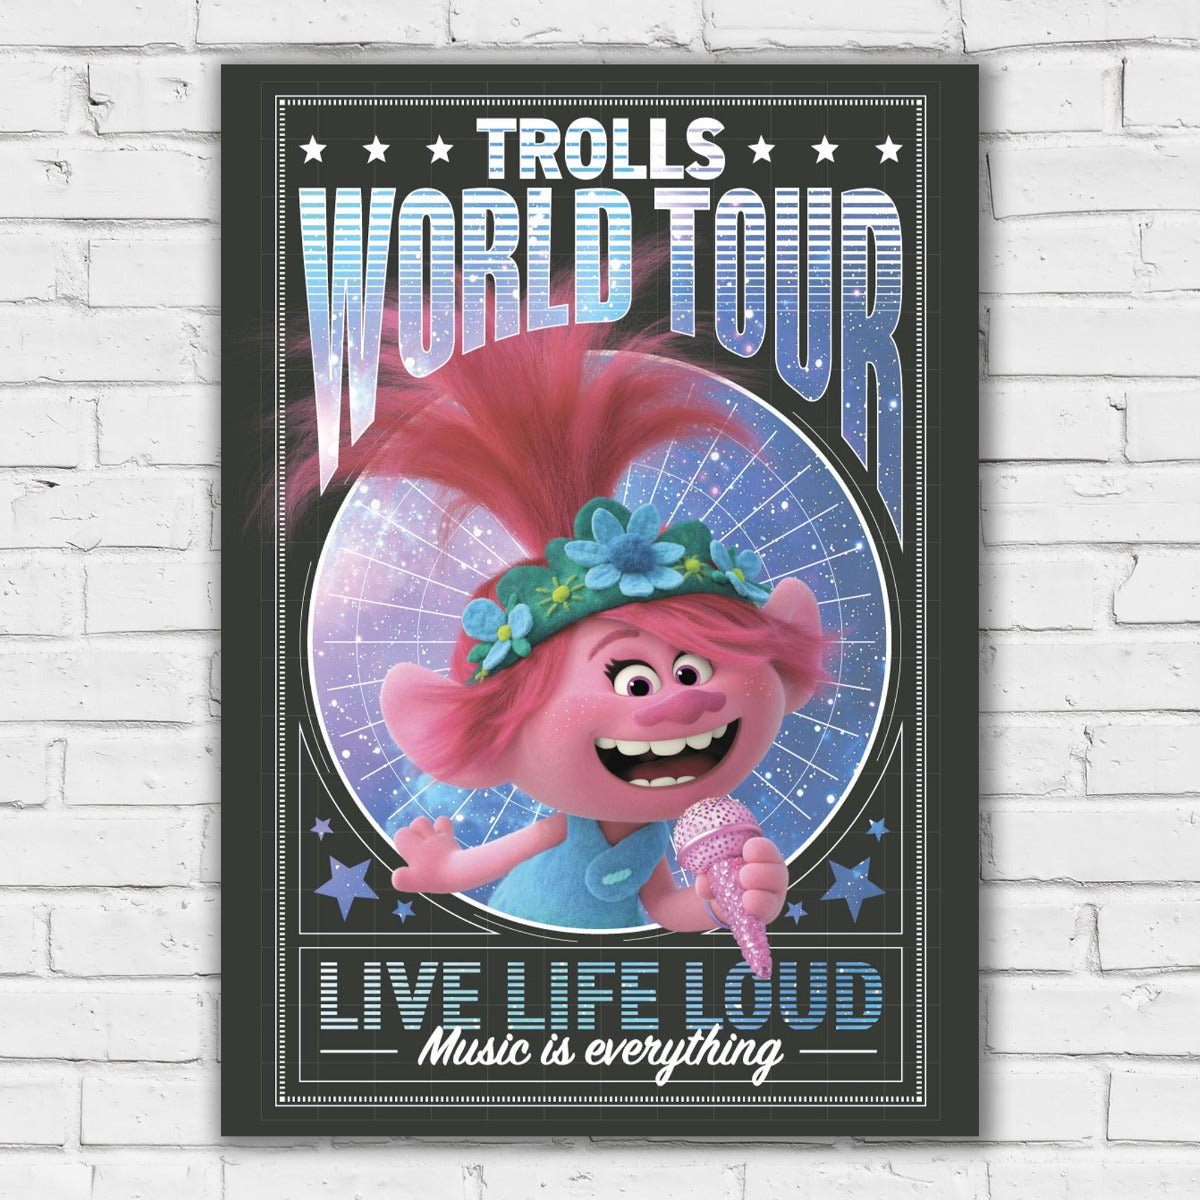 Trolls World Tour Print - Poppy Microphone